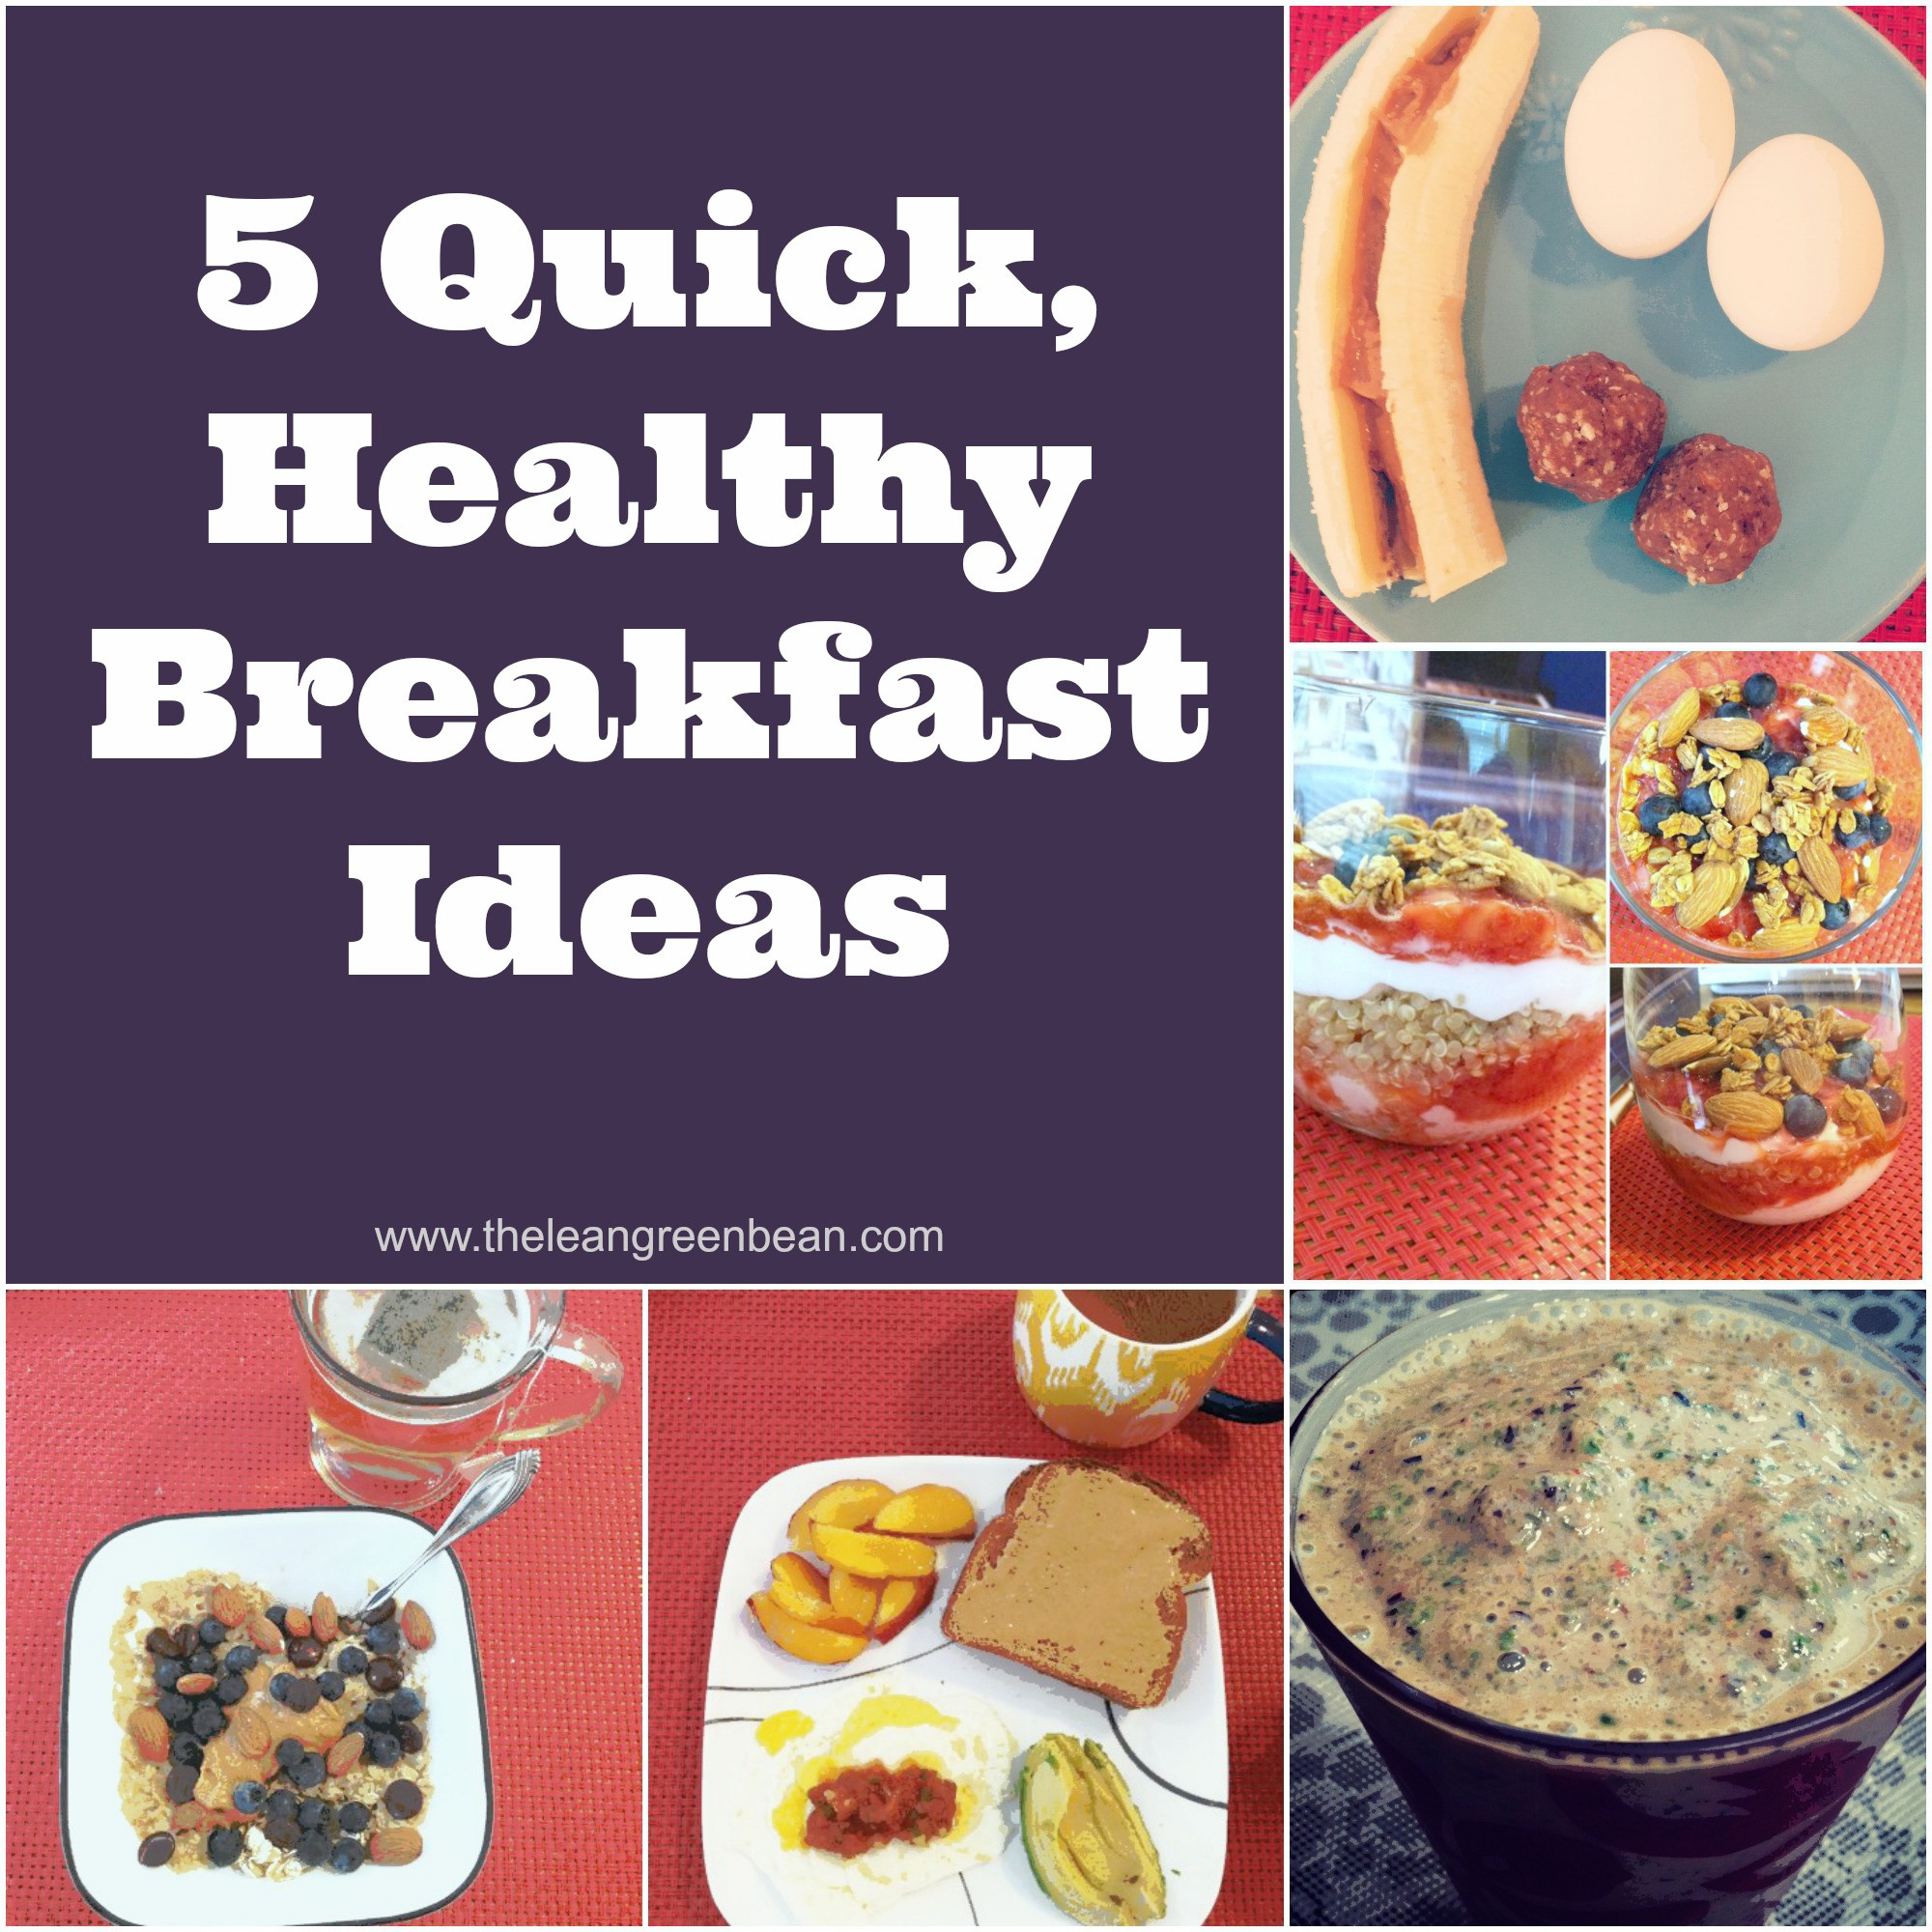 Fast Easy Healthy Breakfast
 5 Quick Healthy Breakfast Ideas from a Registered Dietitian